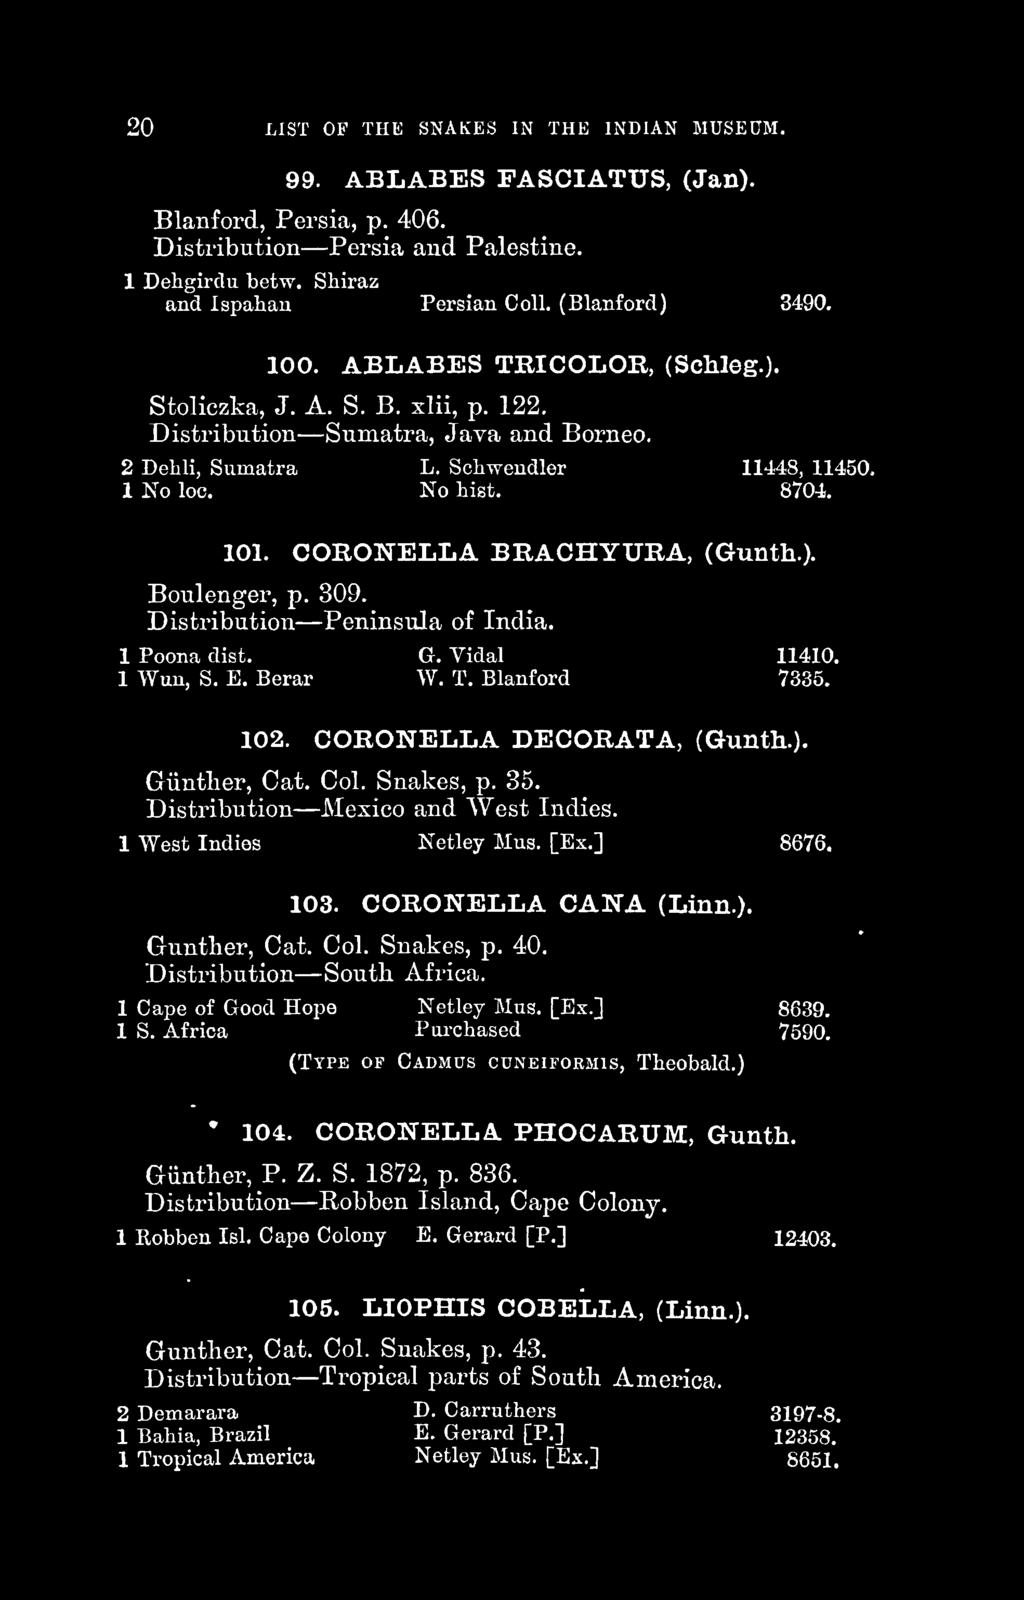 101. CORONELLA BRACHYURA, (Gunth.). Boulenger, p. 309. Distribution Peninsula of India. 1 Poona dist. G. Vidal 11410. 1 Wun, S, E. Berar W. T. Blanford 7335. 102. CORONELLA DECORATA, (Gunth.). Giinther, Cat.